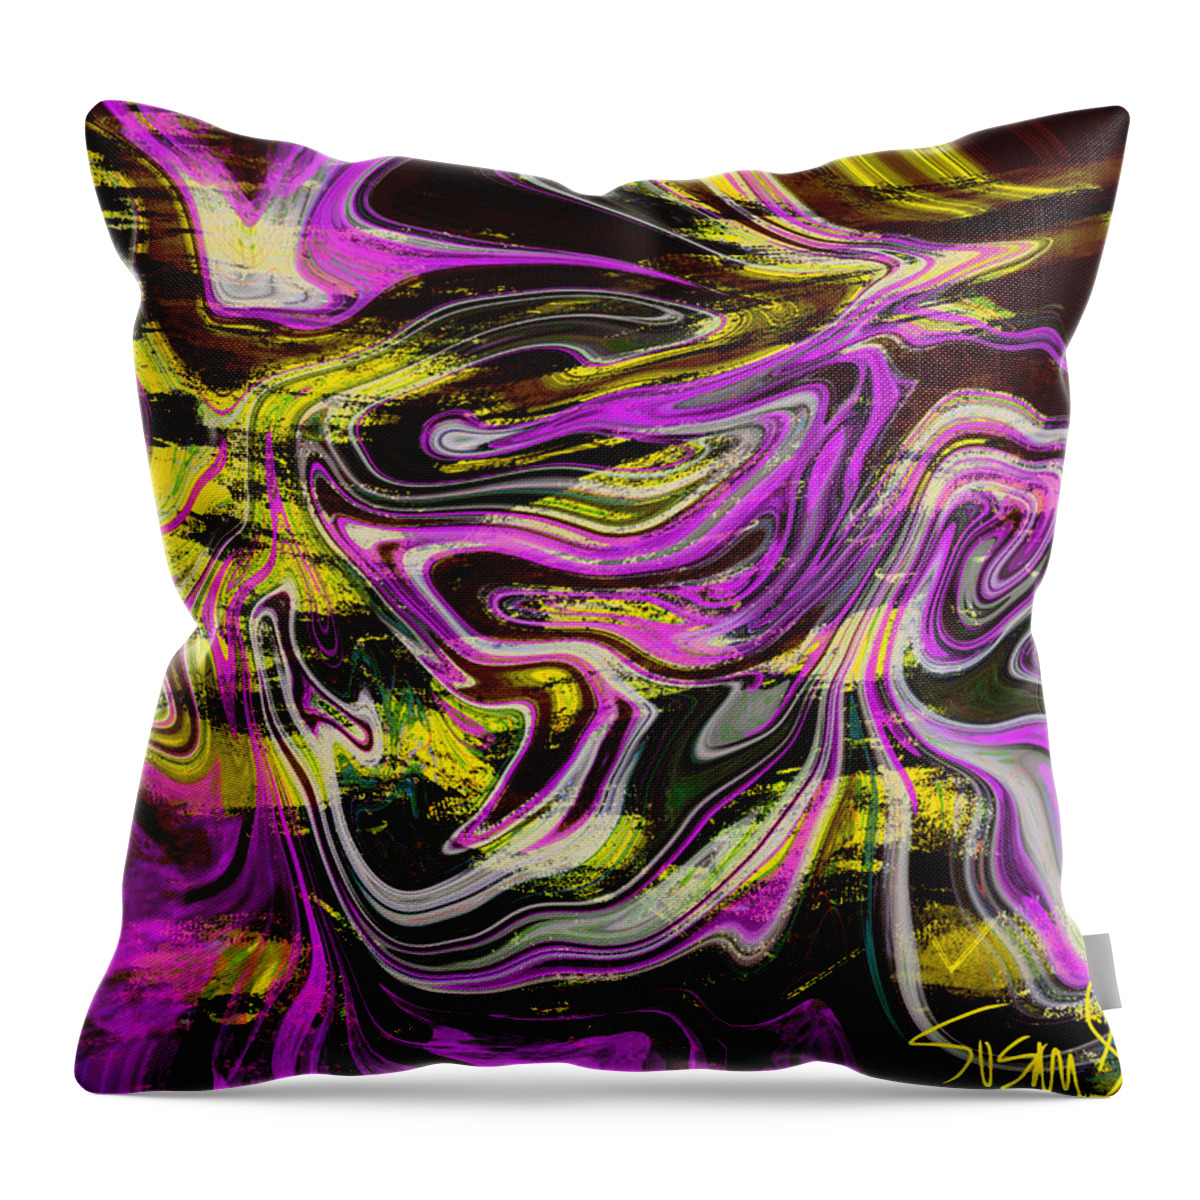 Purple Throw Pillow featuring the digital art Totally Cellular by Susan Fielder